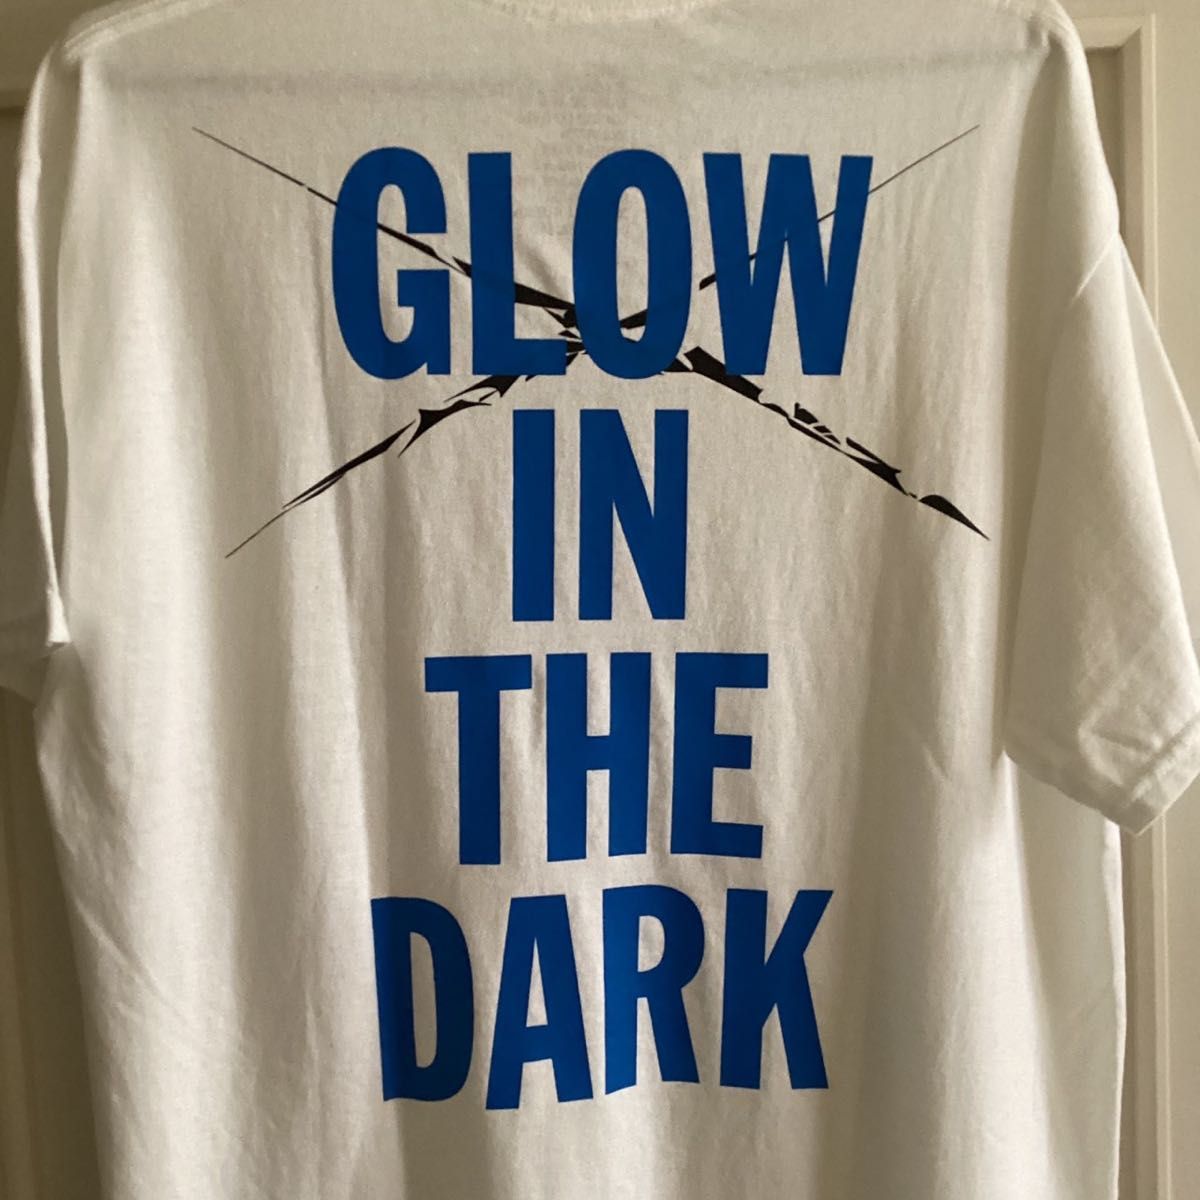 The 15 glow in the dark nexus vii large プリントTシャツ Tee WHITE